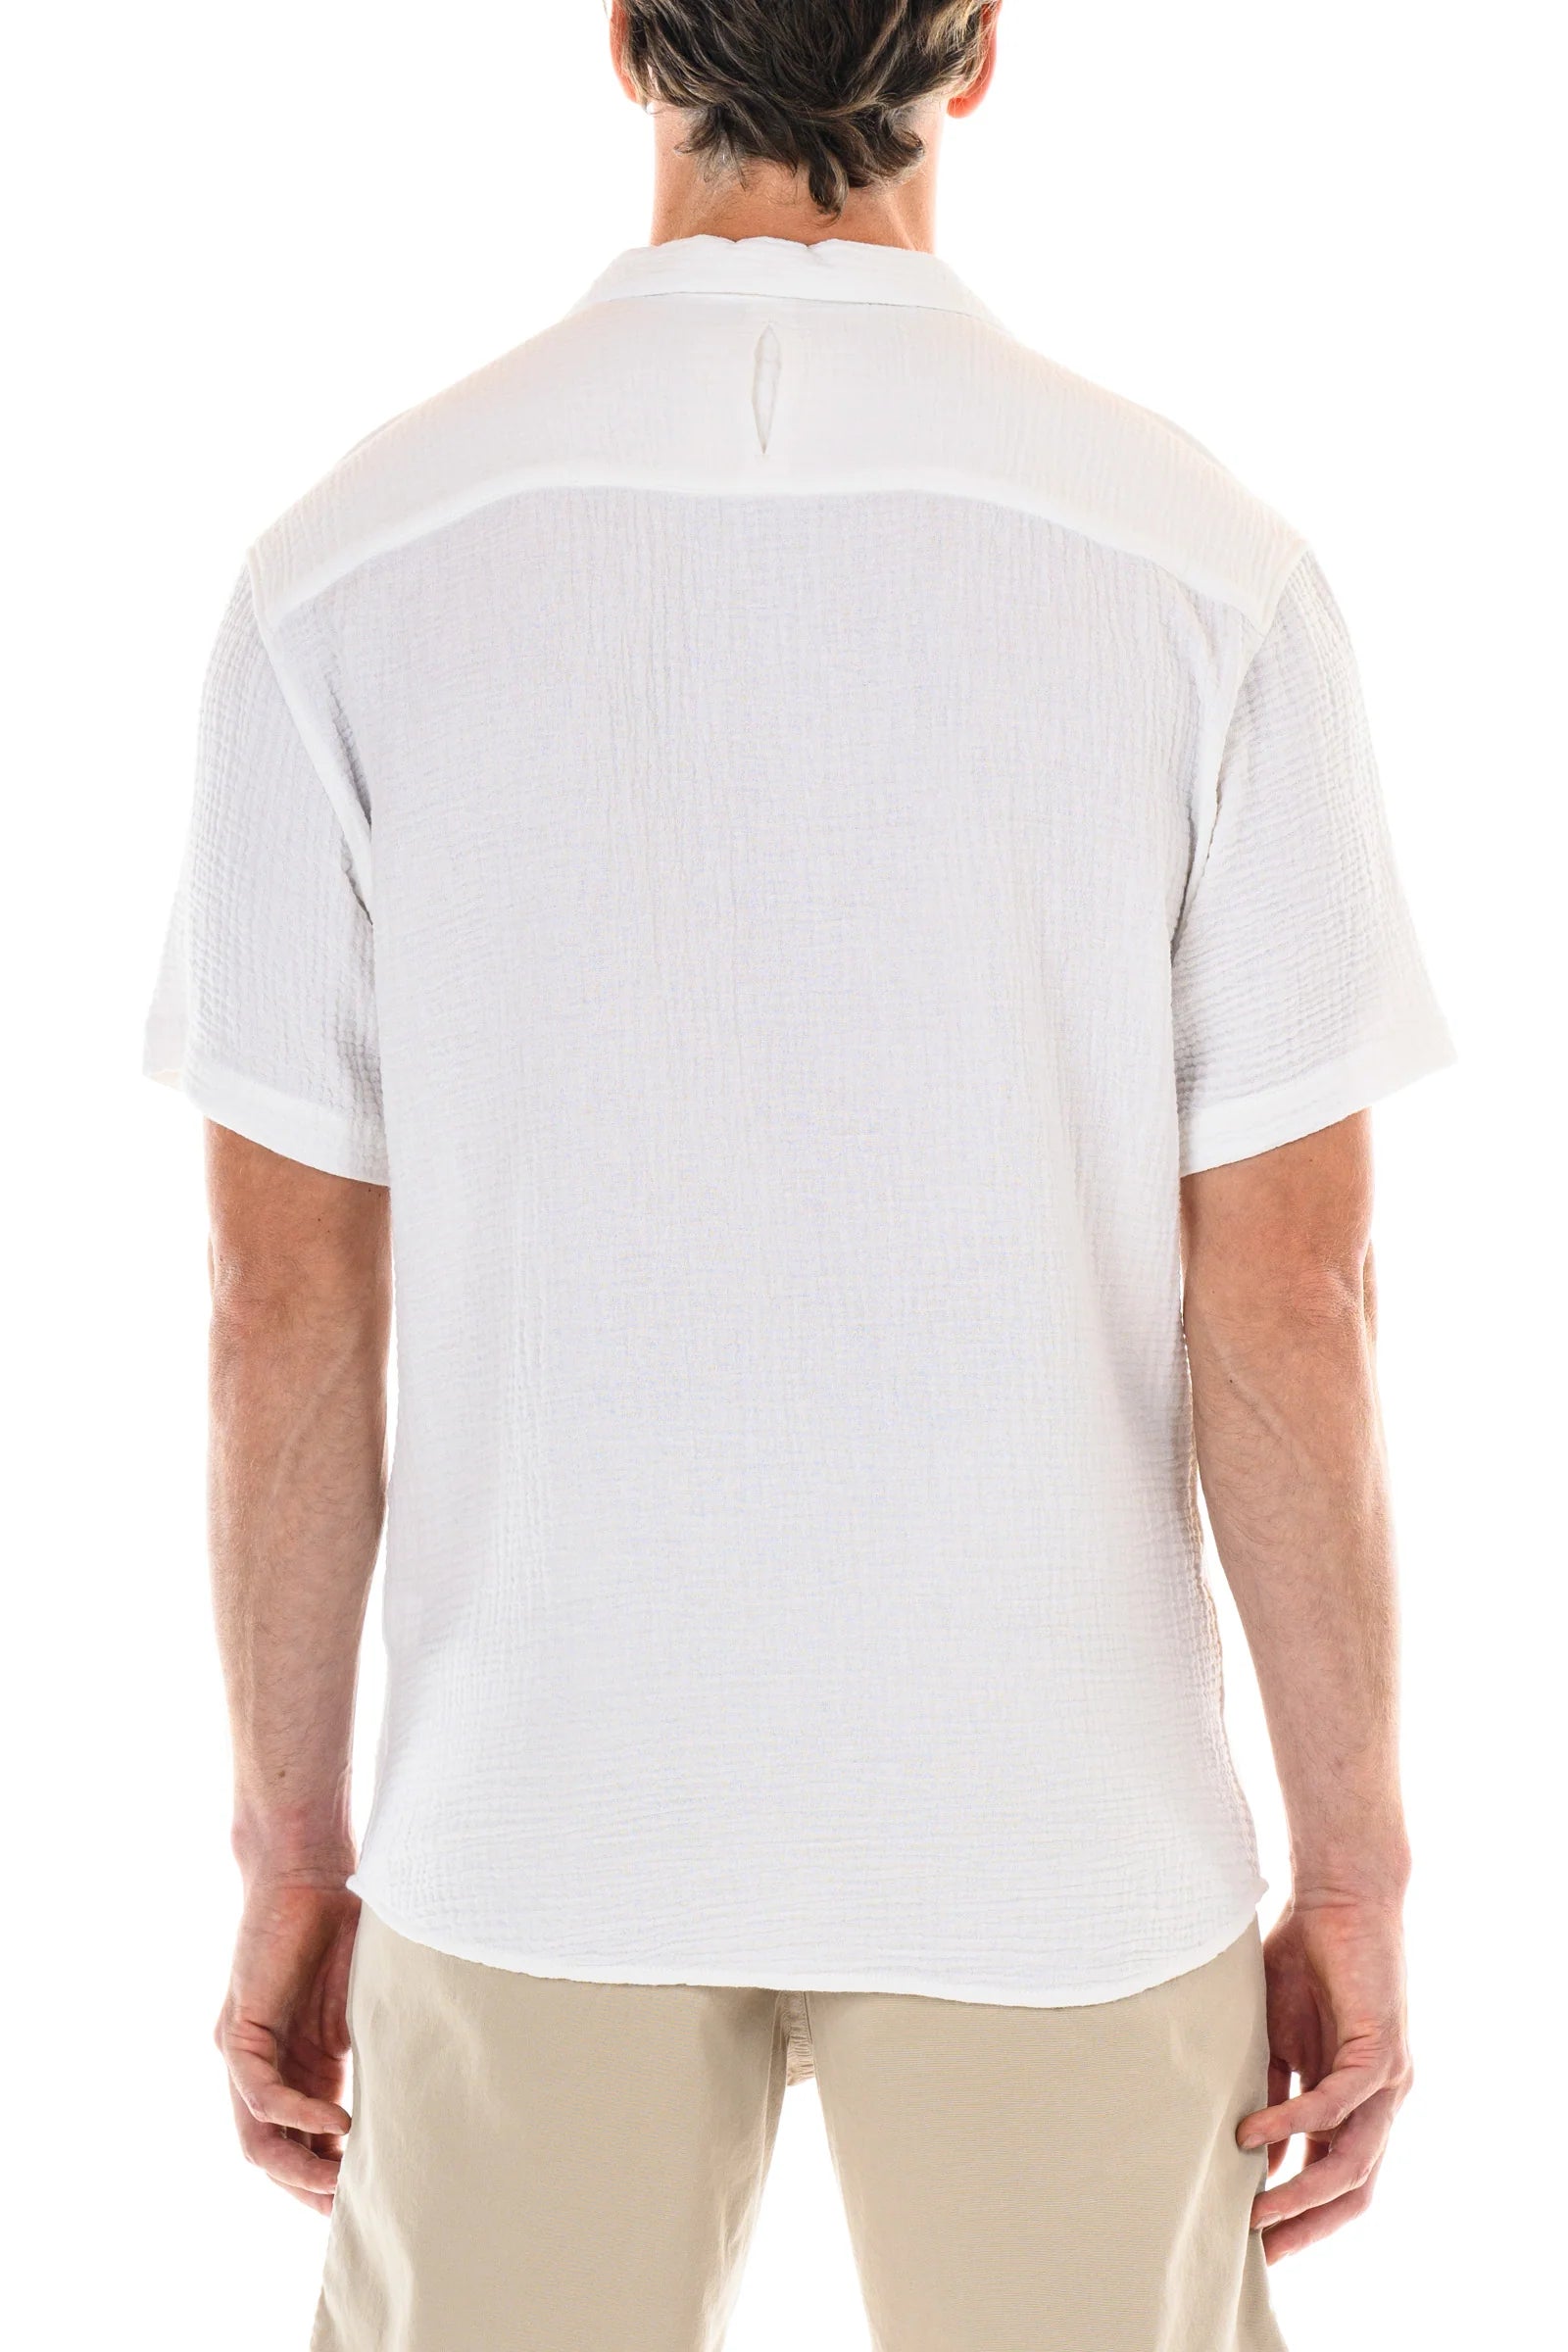 OP Morro Bay short sleeve shirt white